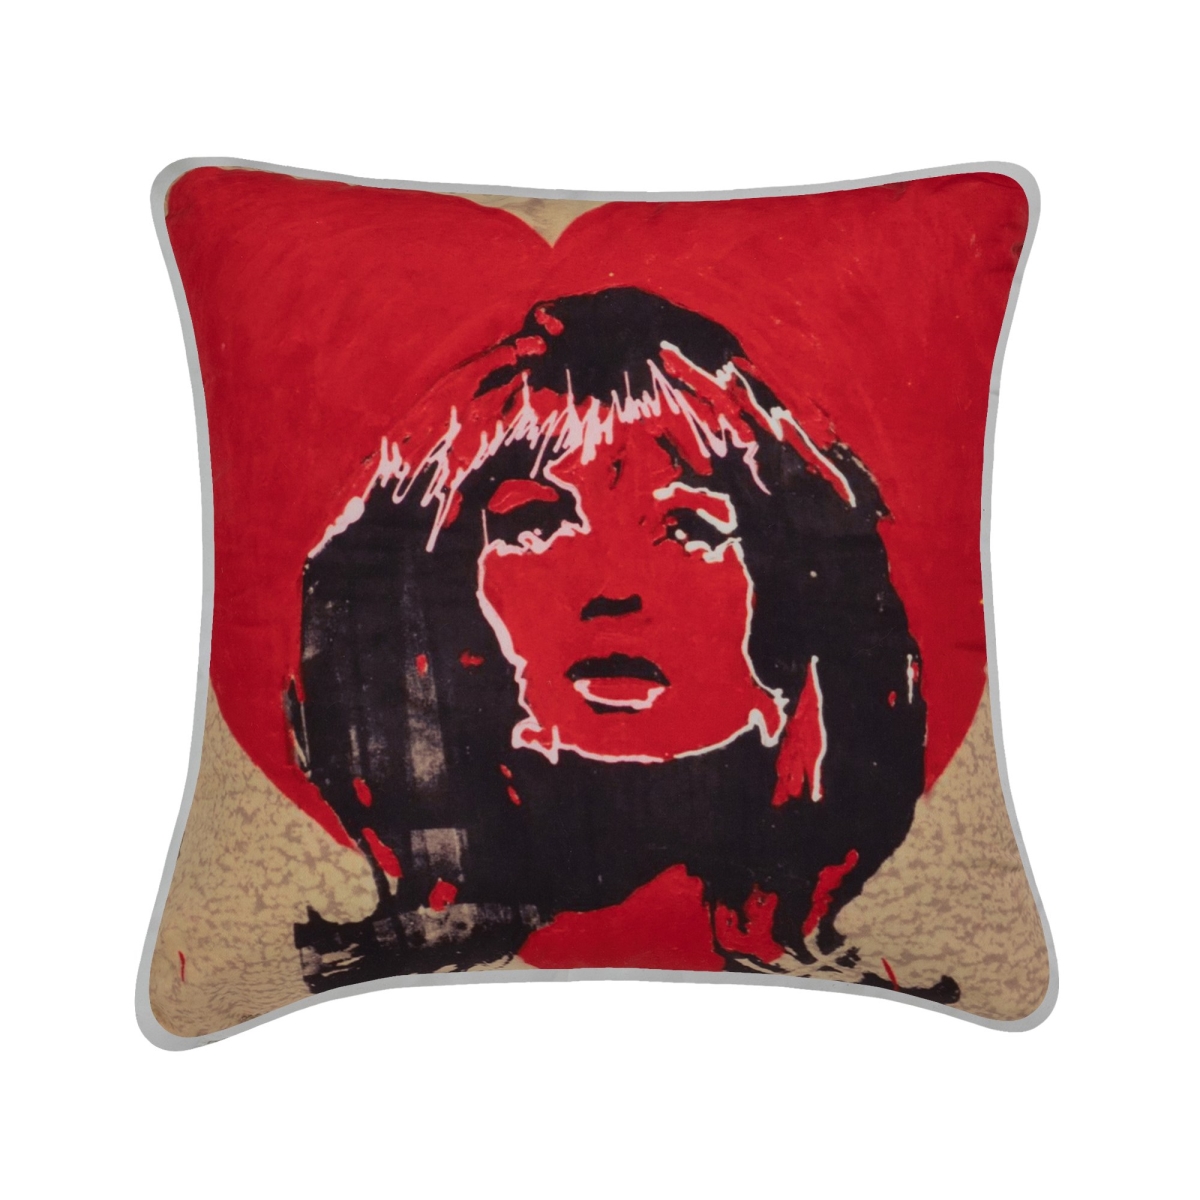 Sq-pi-jg-wohe-1818 18 X 18 In. Jessica Gorlicky Woman Heart Decorative Cushion - 100 Percent Polyester